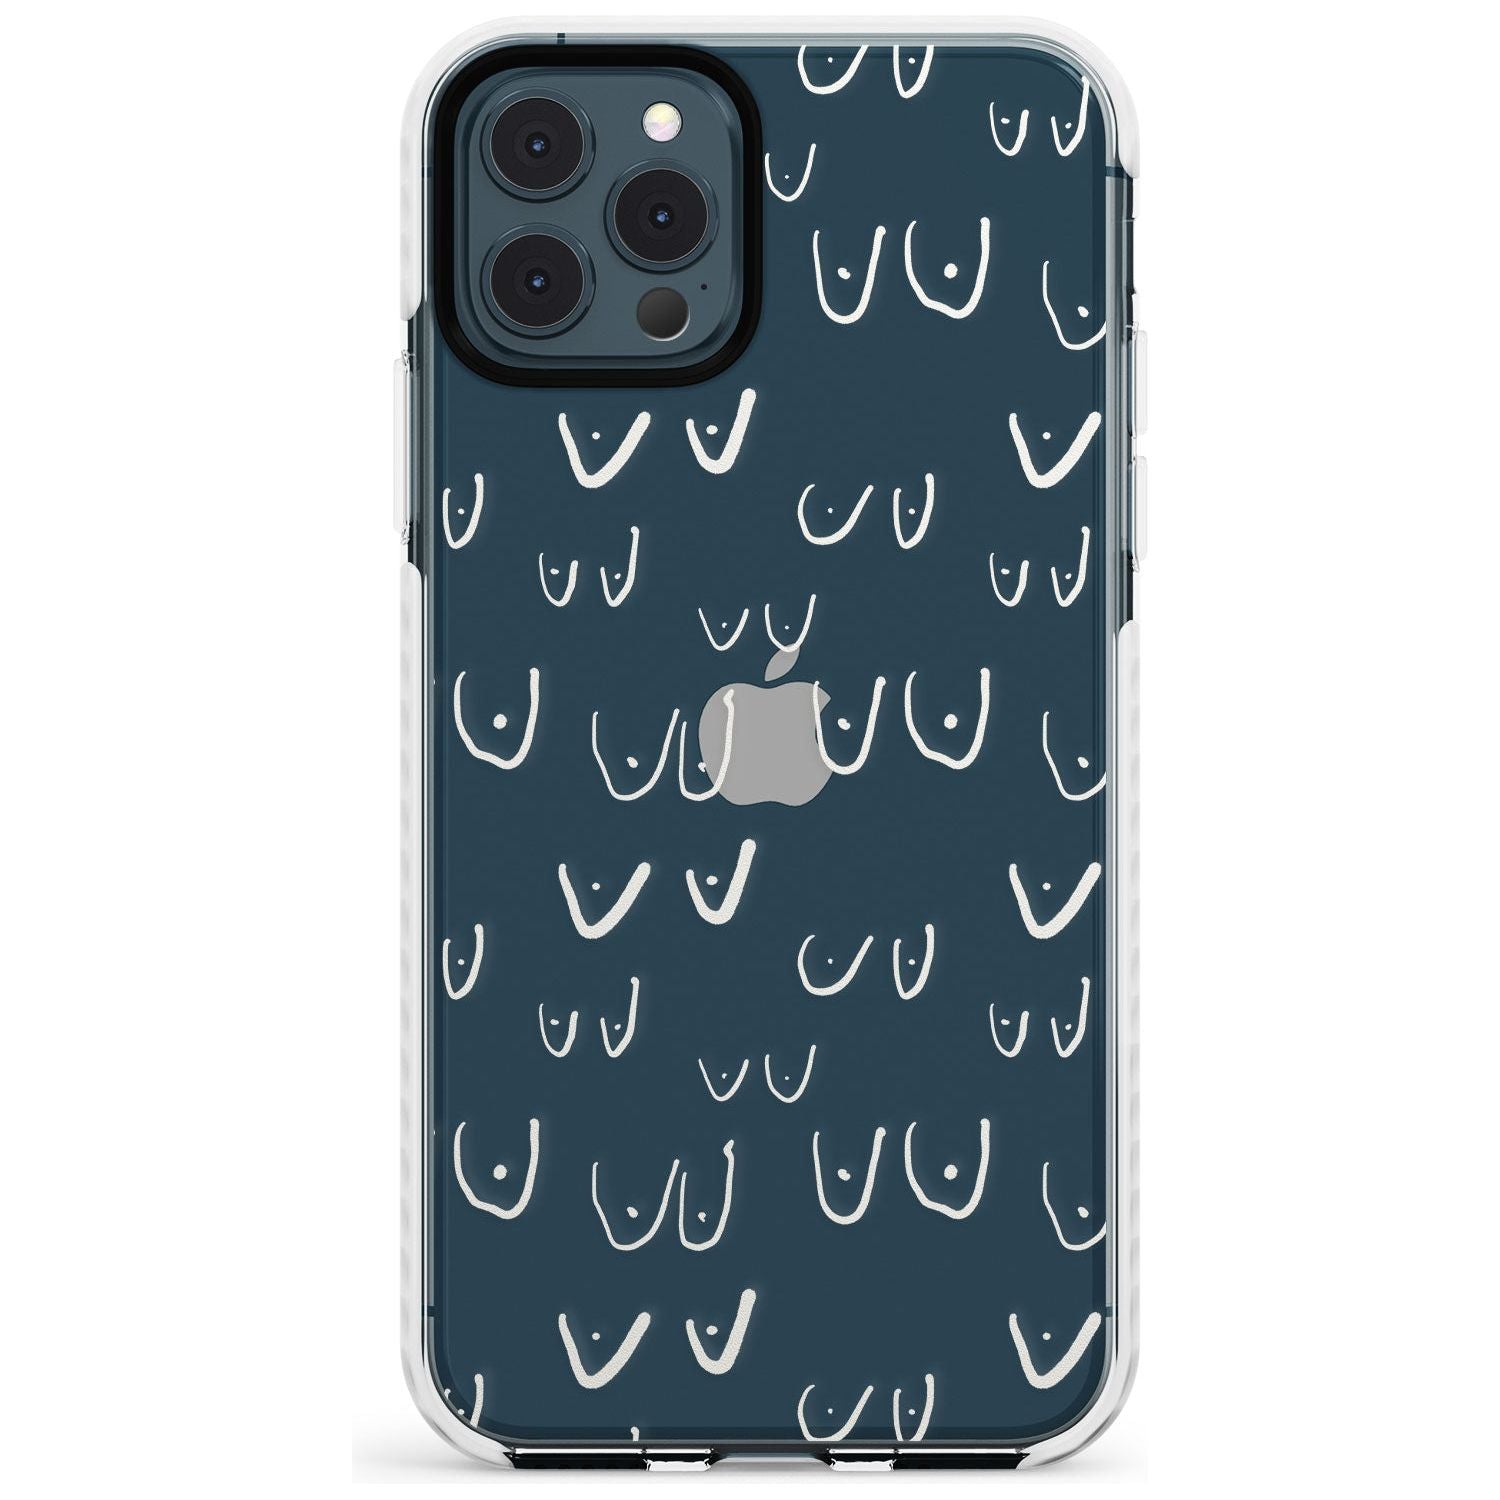 Boob Pattern (White) Slim TPU Phone Case for iPhone 11 Pro Max